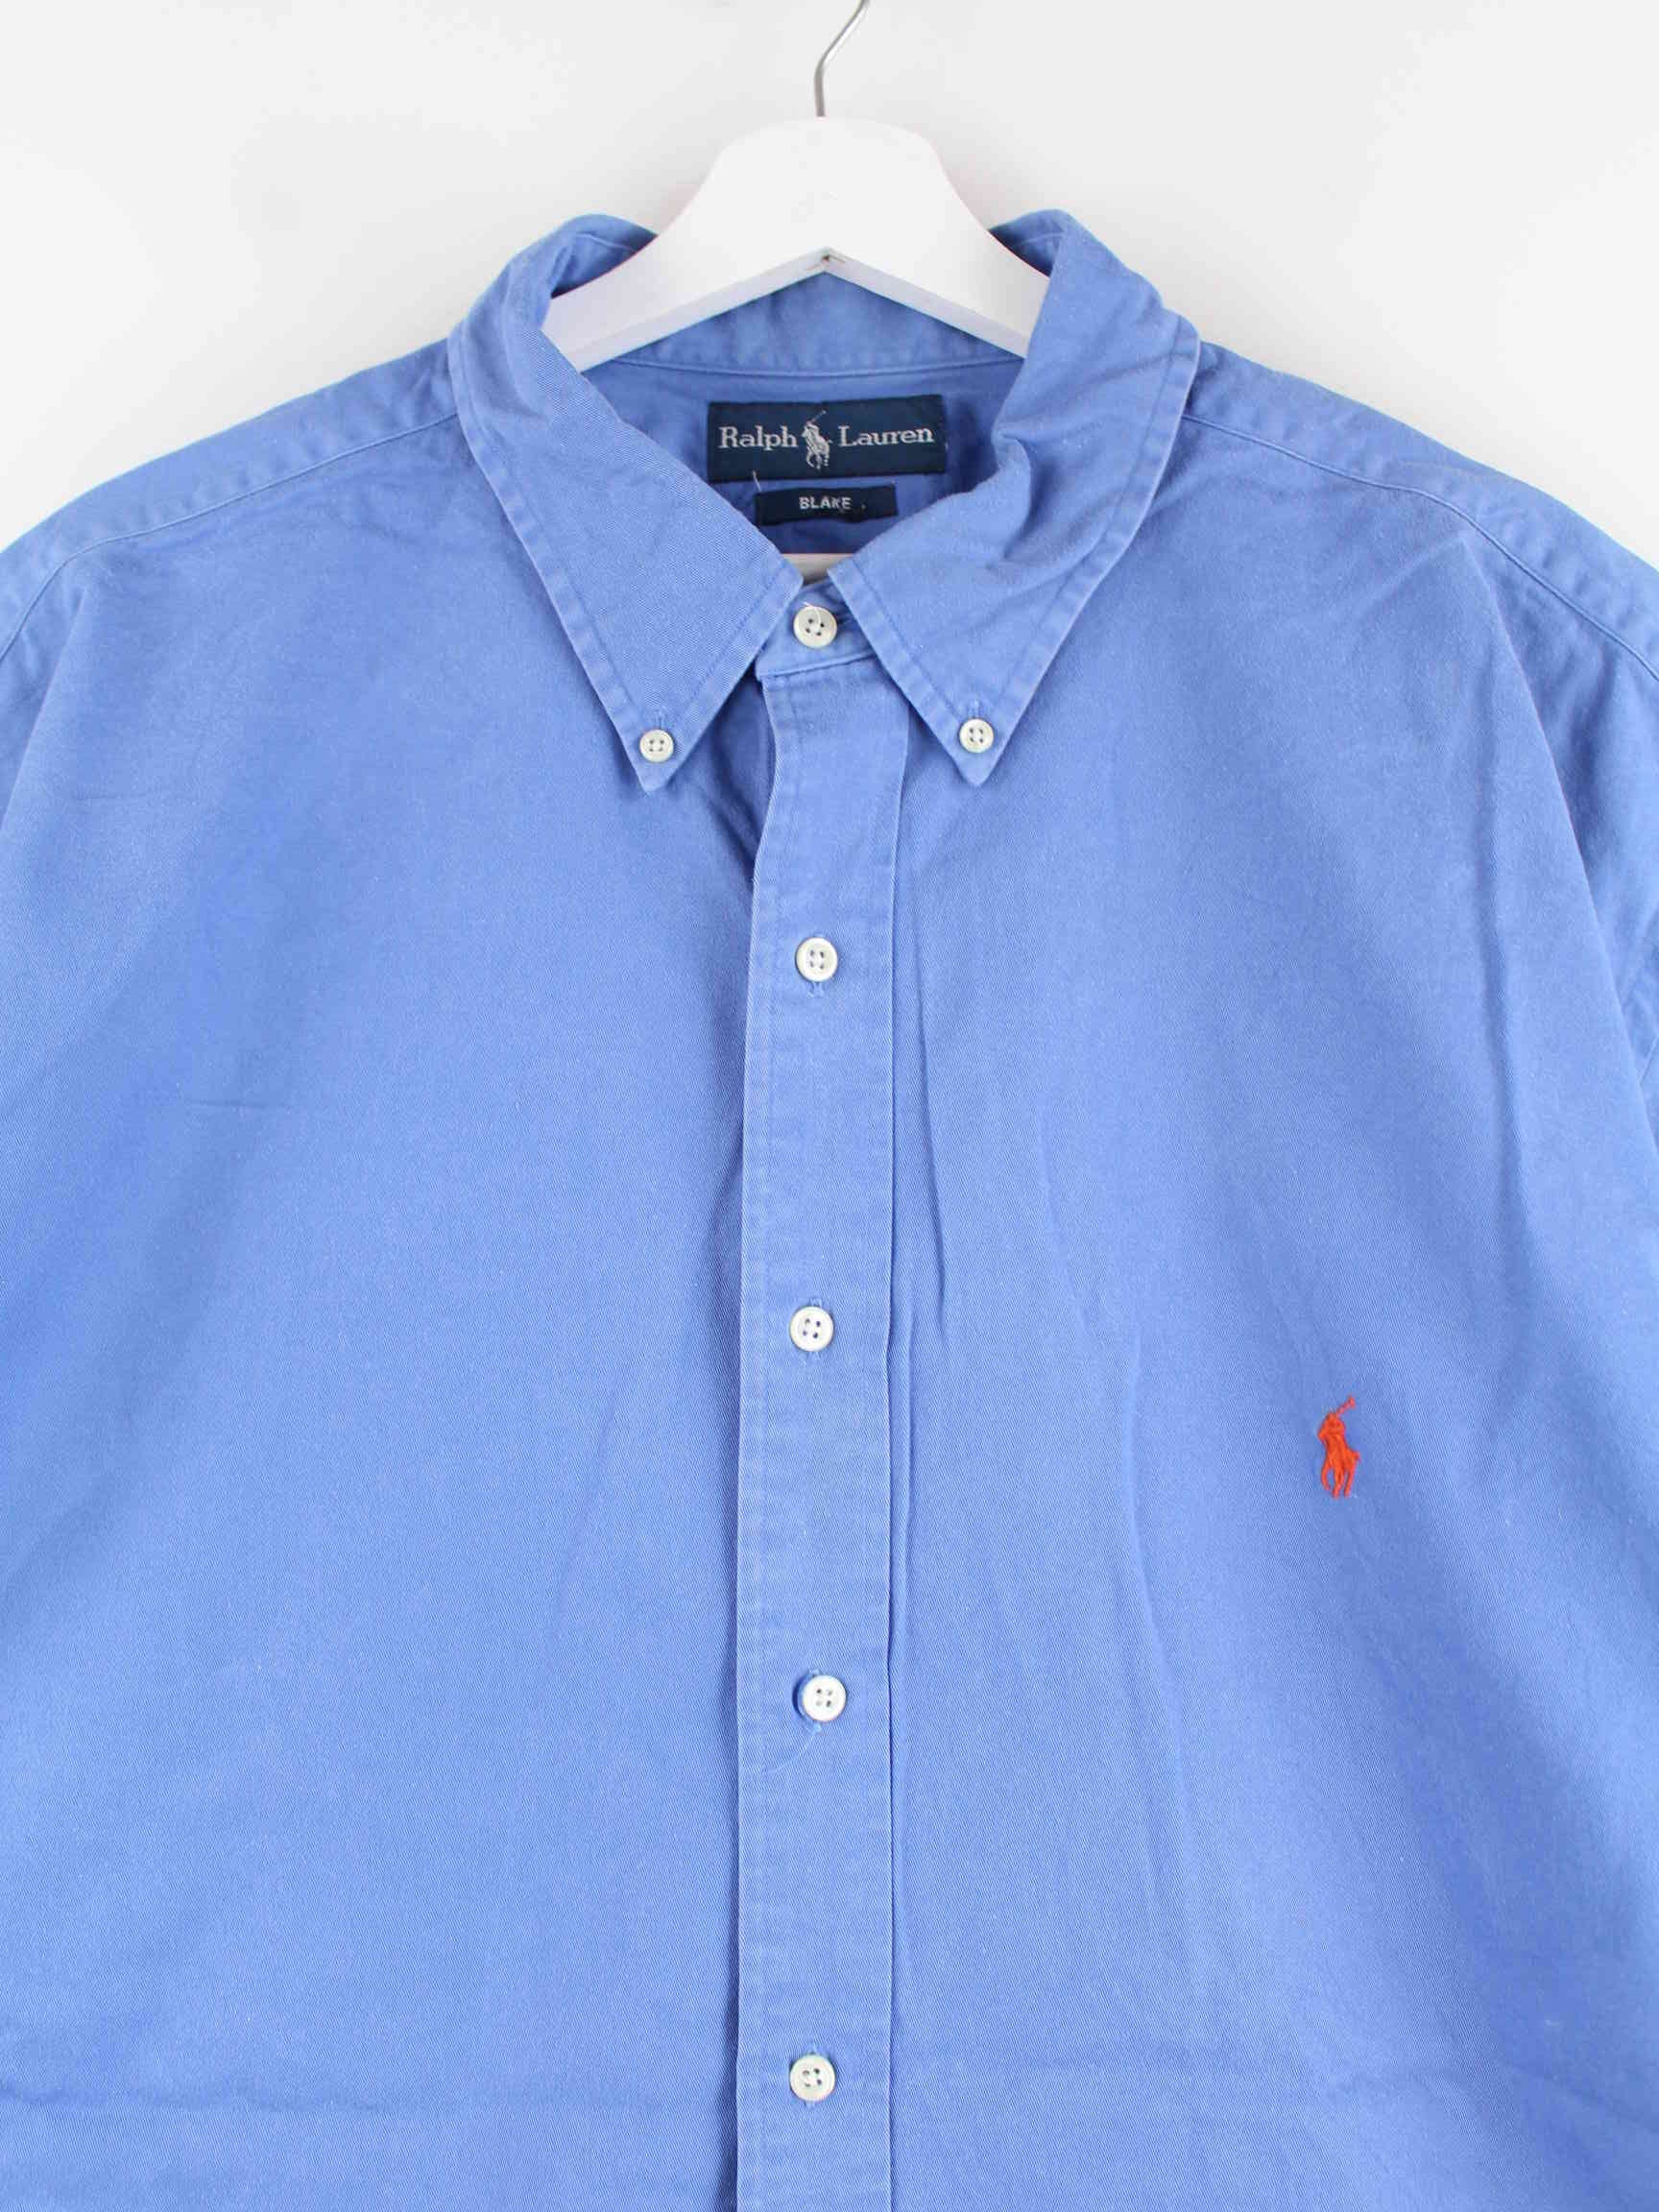 Ralph Lauren 90s Vintage Blake Kurzarm Hemd Blau 4XL (detail image 1)